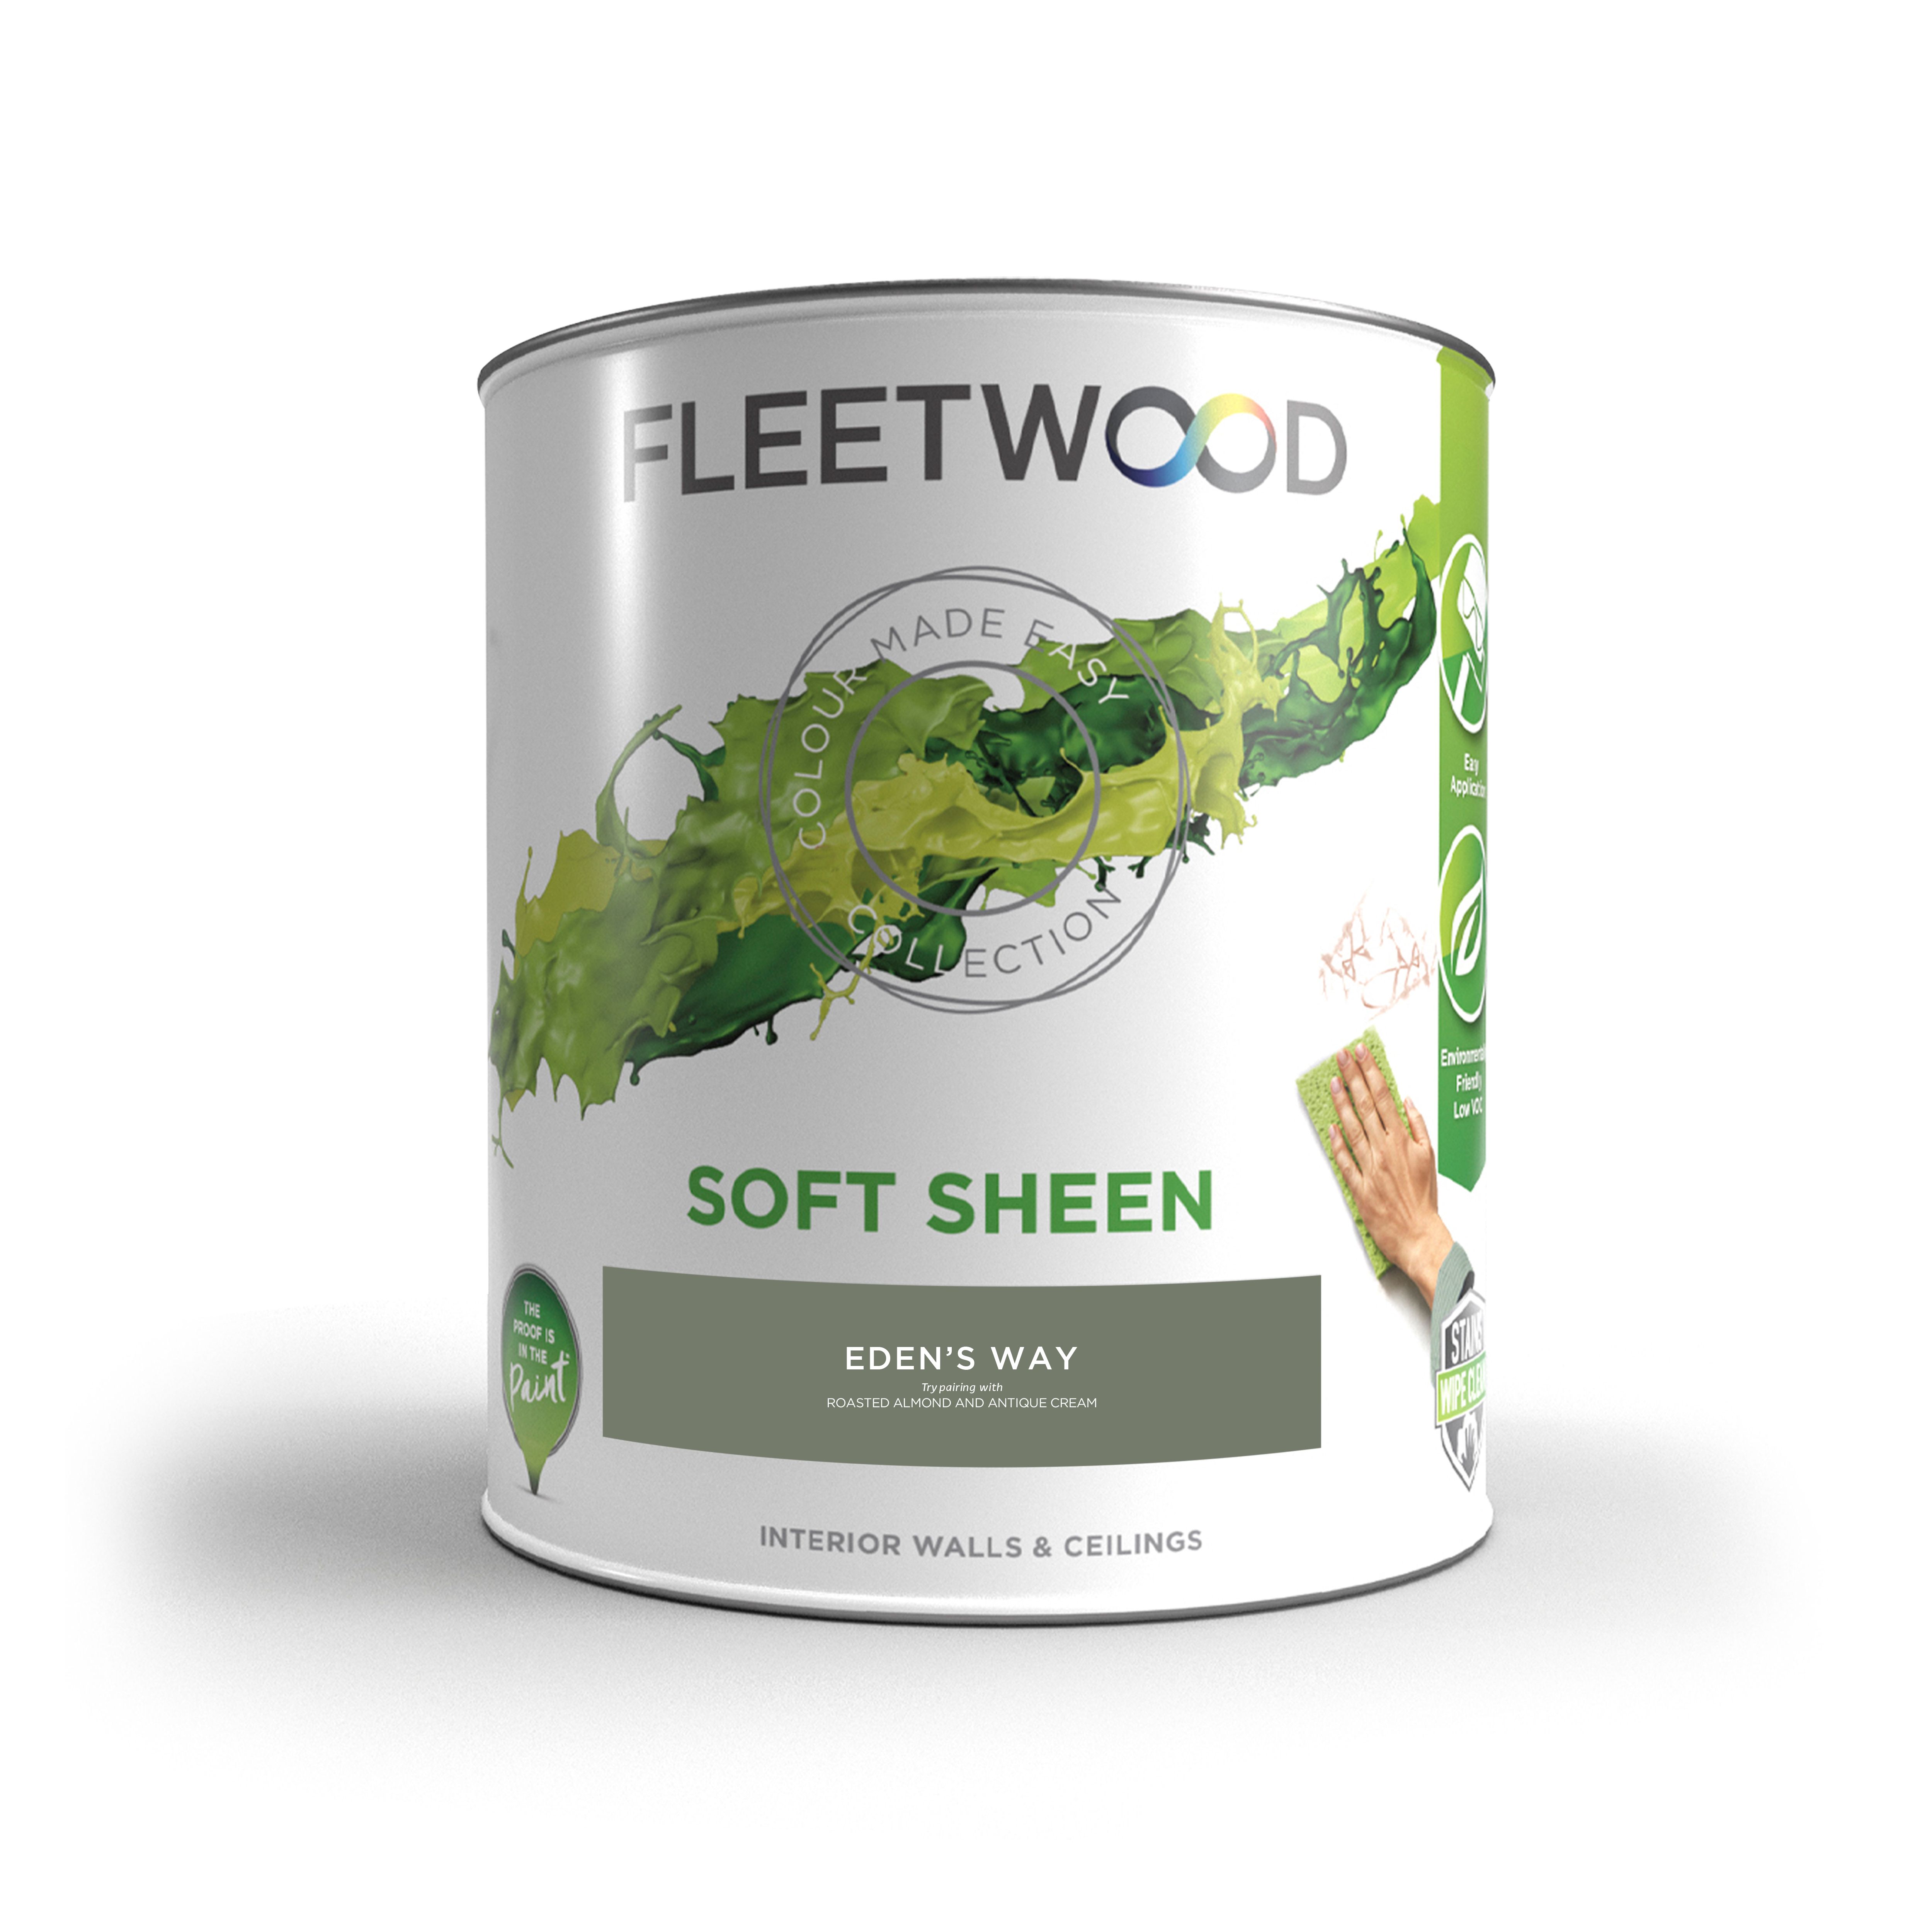 Fleetwood Edens Way Soft sheen Emulsion paint, 5L